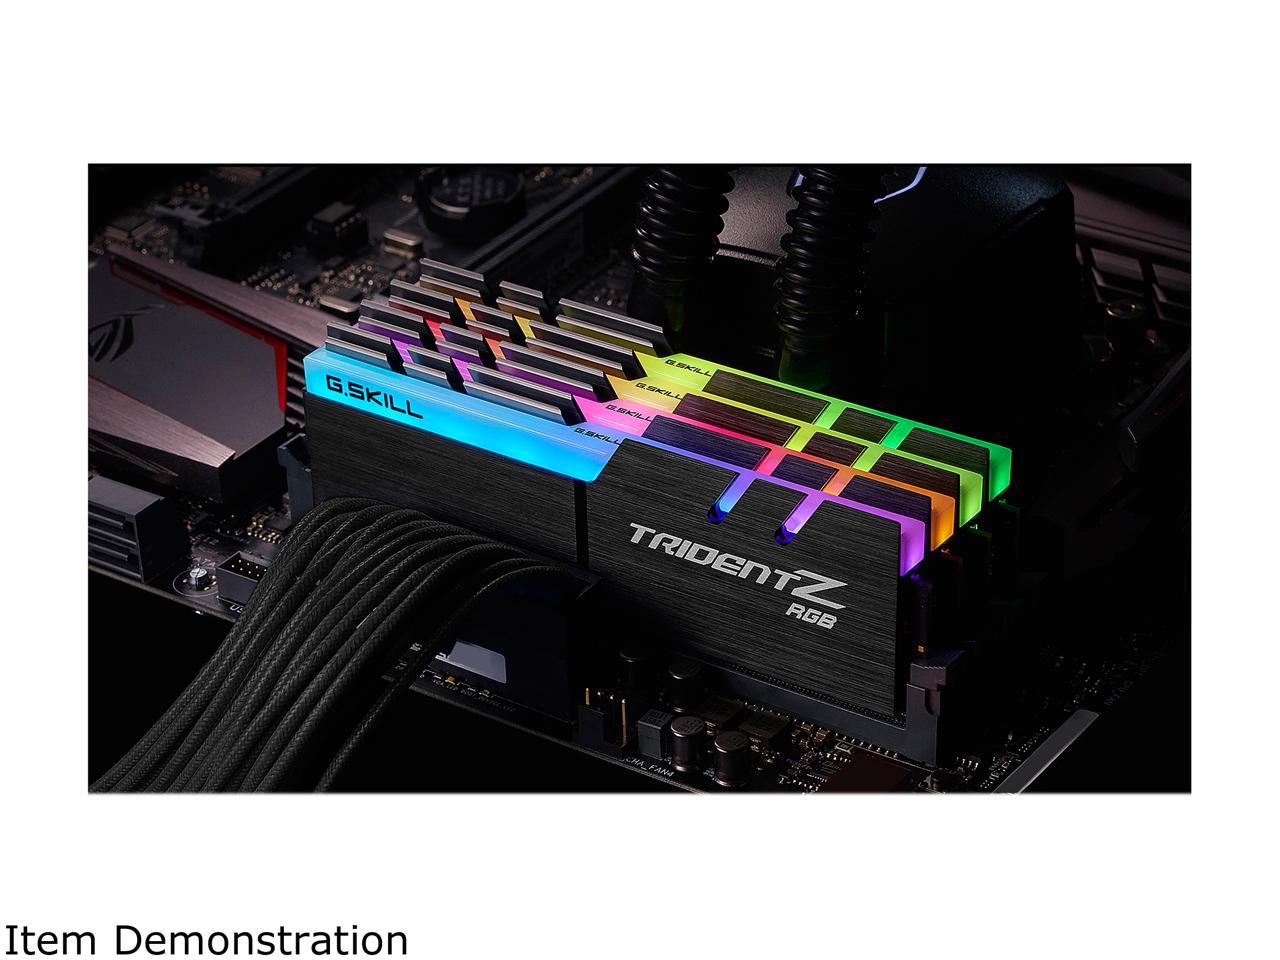 G.SKILL TridentZ RGB Series 32GB (4 x 8GB) 288-Pin DDR4 SDRAM DDR4 3000 (PC4 24000) Memory (Desktop Memory) Model F4-3000C16Q-32GTZR